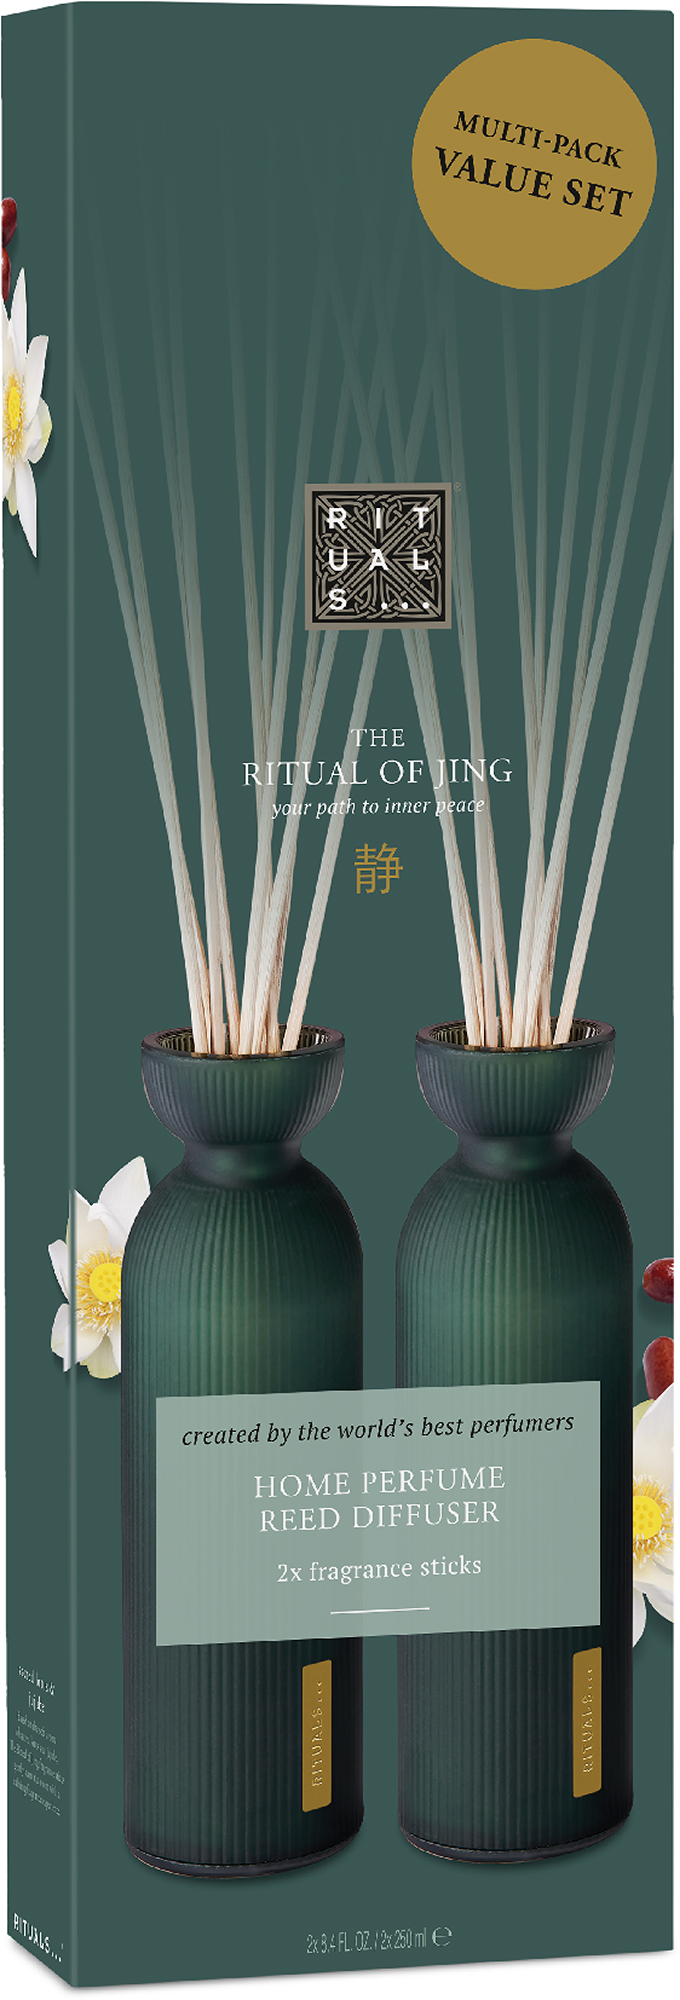 Rituals The Ritual of Jing Fragrance Sticks online kaufen 